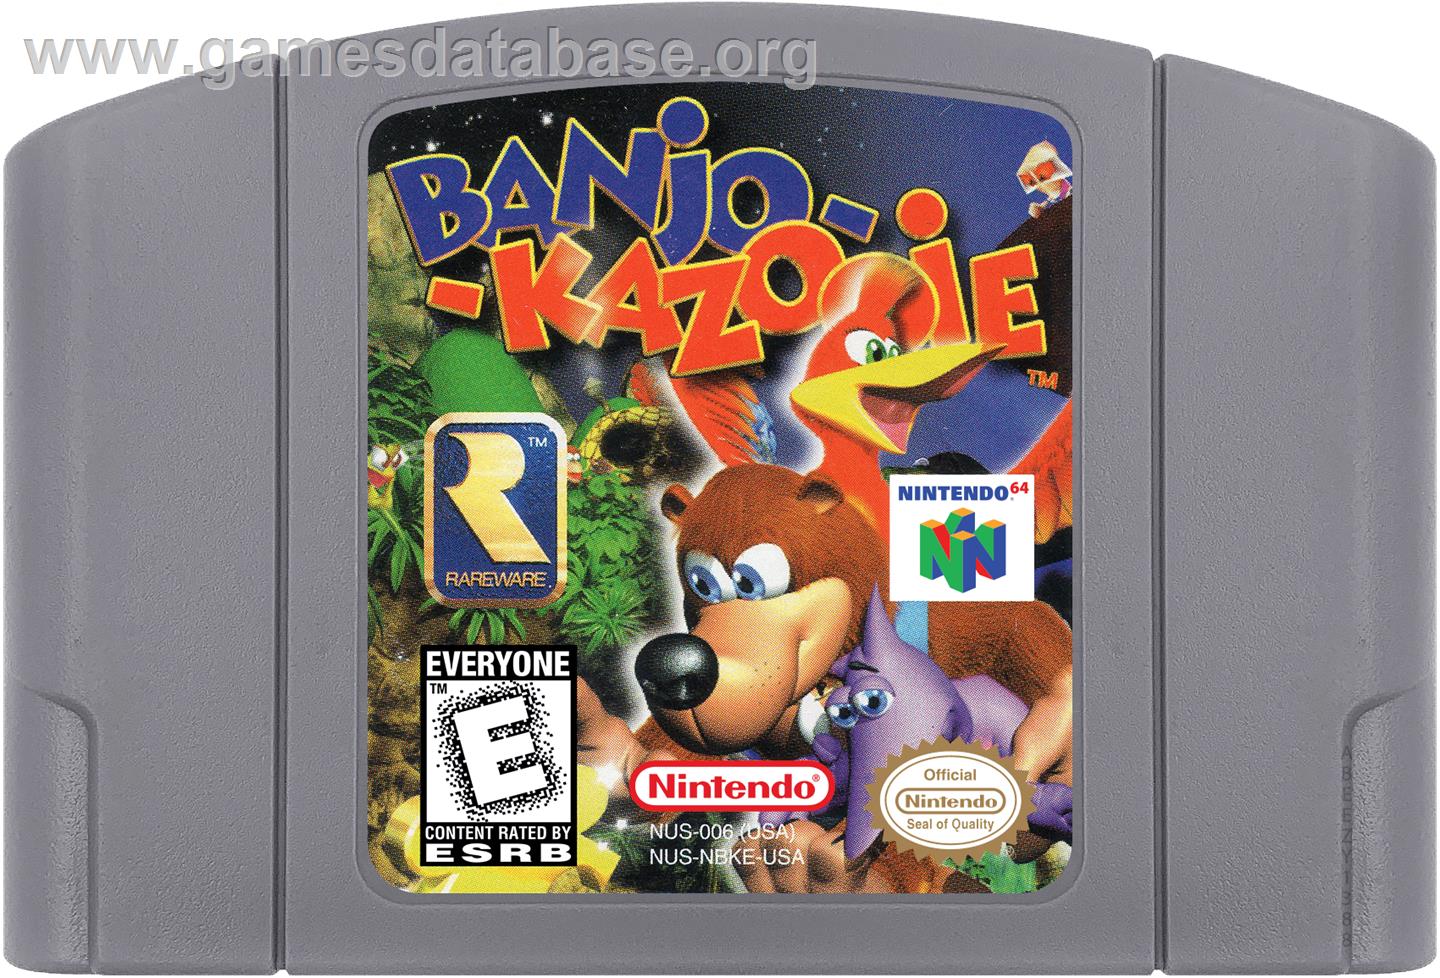 Banjo-Kazooie - Nintendo N64 - Artwork - Cartridge